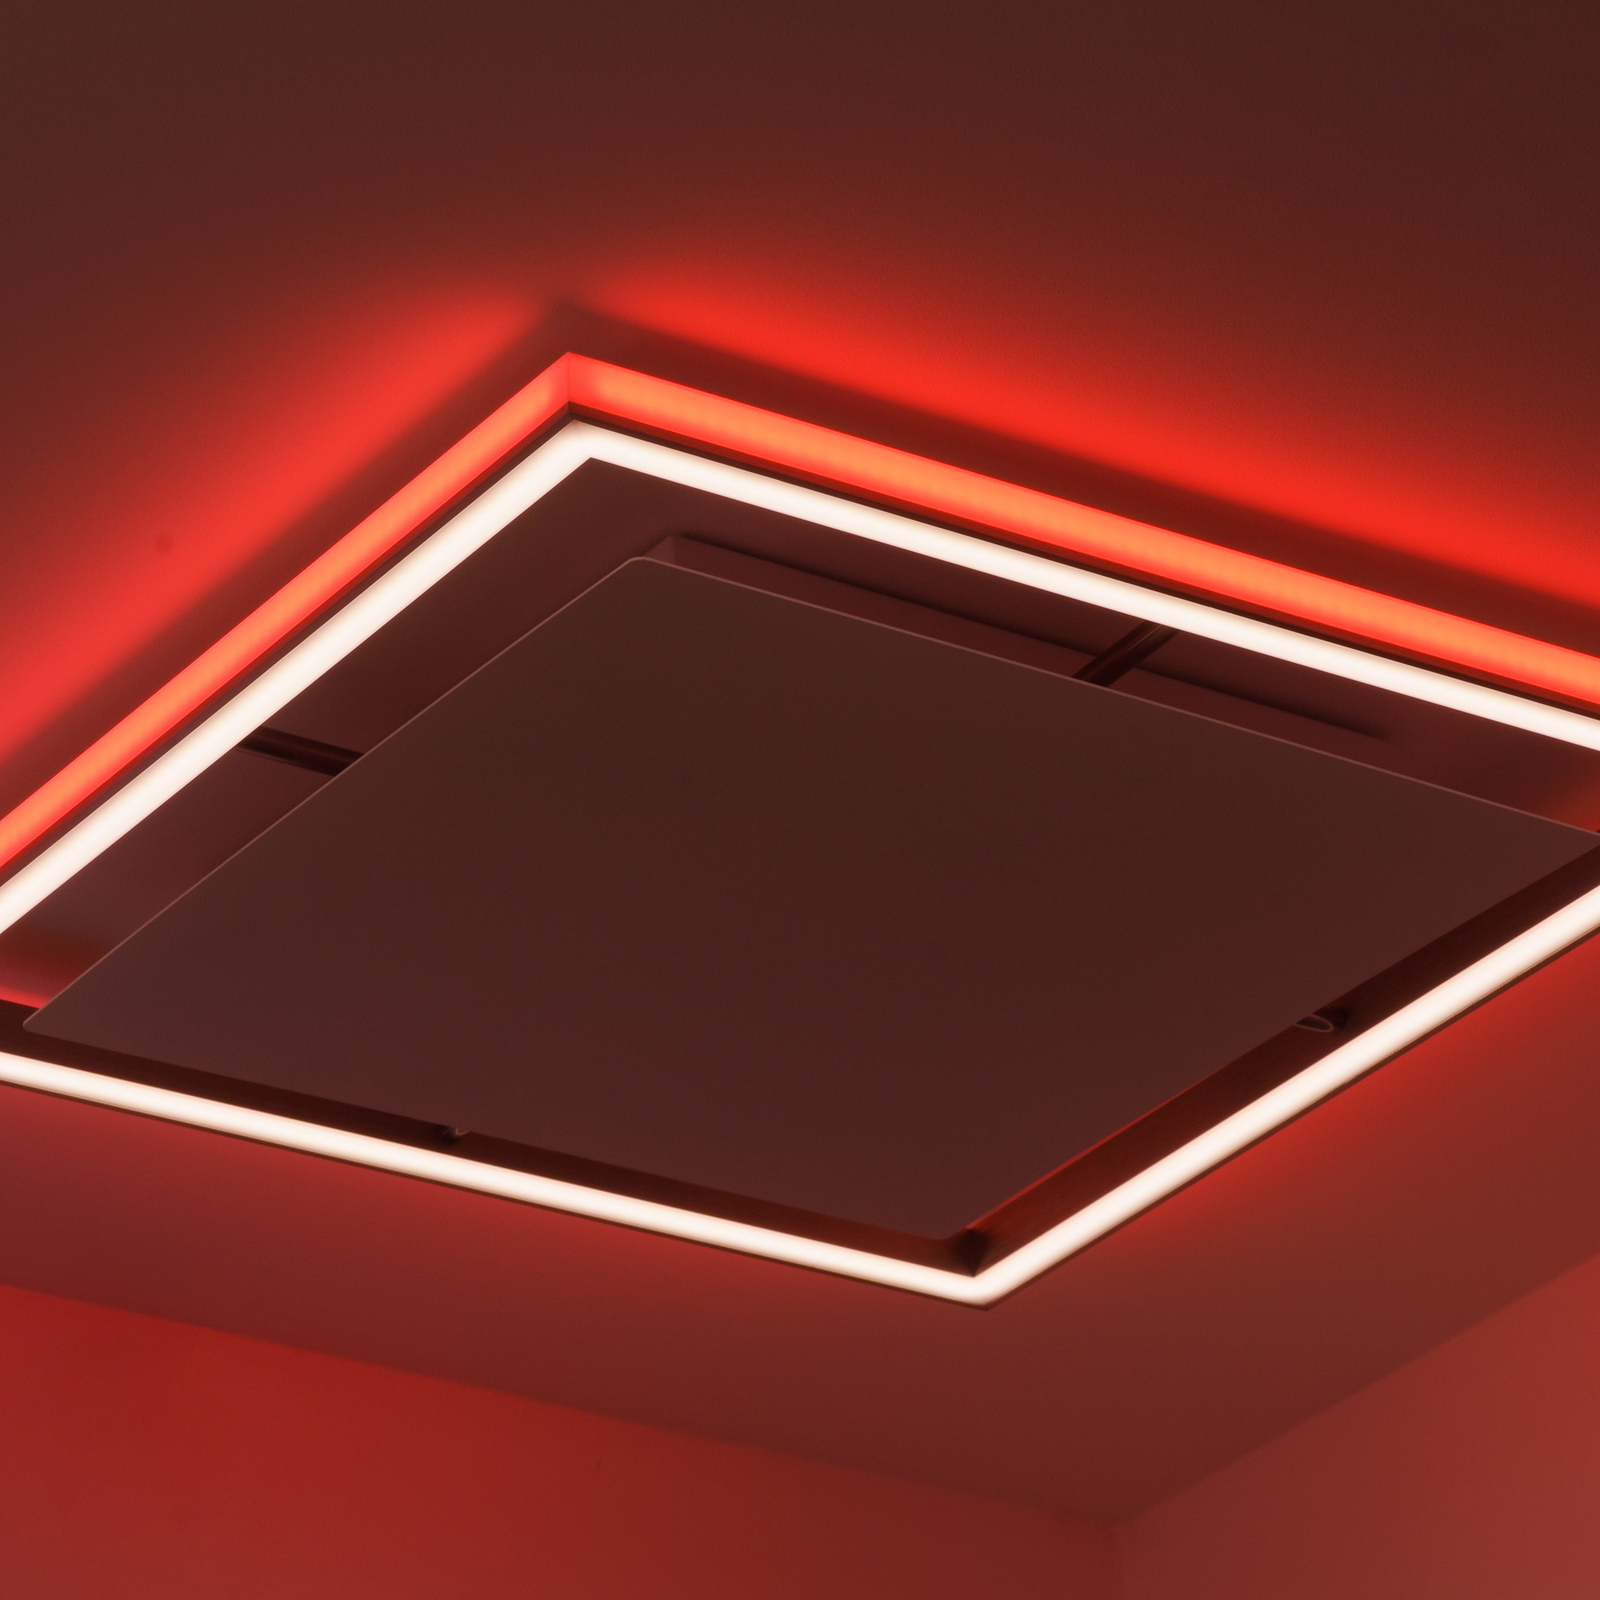 Paul Neuhaus Helix LED plafondlamp vierkant 50cm